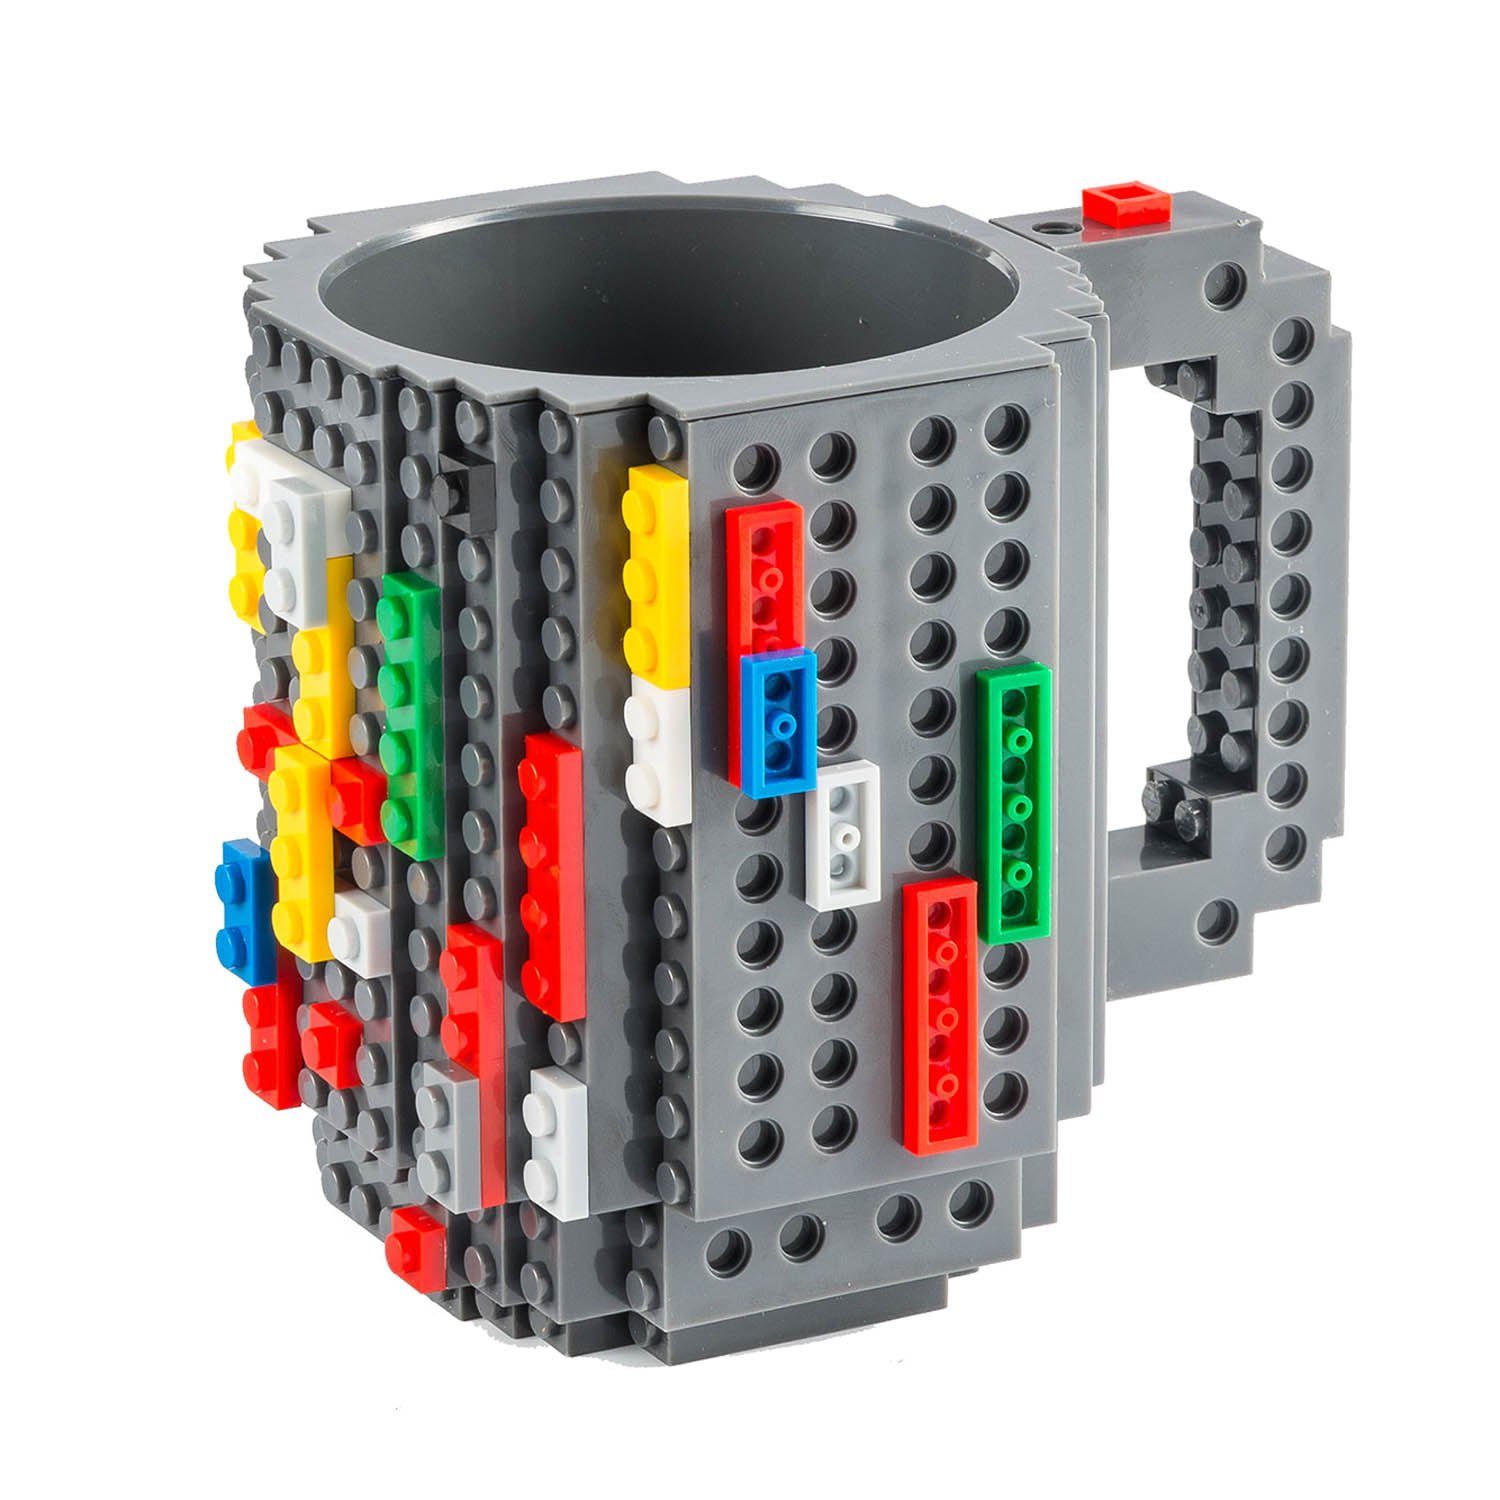 Goods+Gadgets Tasse Brick Mug Tasse mit Bausteinen, Kunststoff, Kaffeetasse Kaffee-Becher 350ml